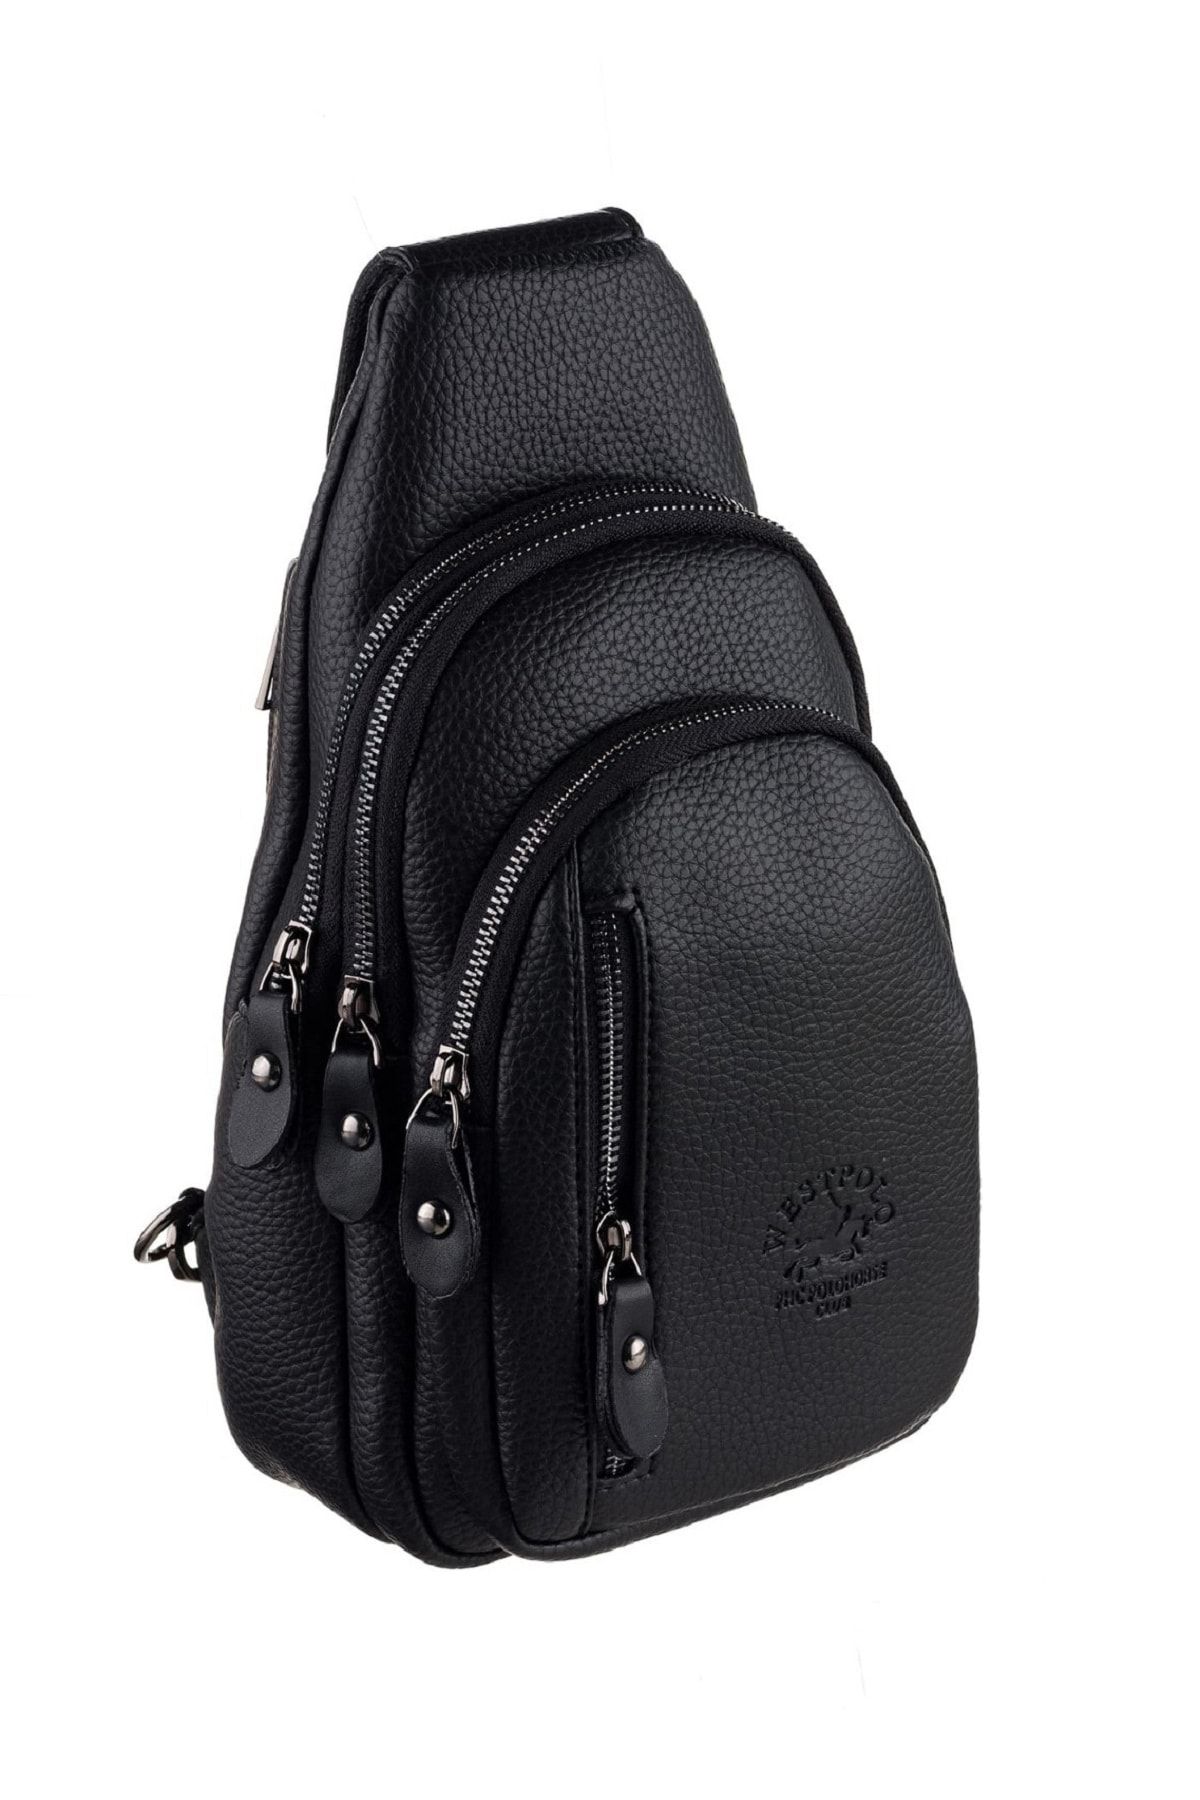 Buy Kimlee Sling Bag One Strap Backpack for Men, Crossbody Shoulder Bag  Travel Hiking Daypack Casual Chest Bag for Walking Travel at Amazon.in